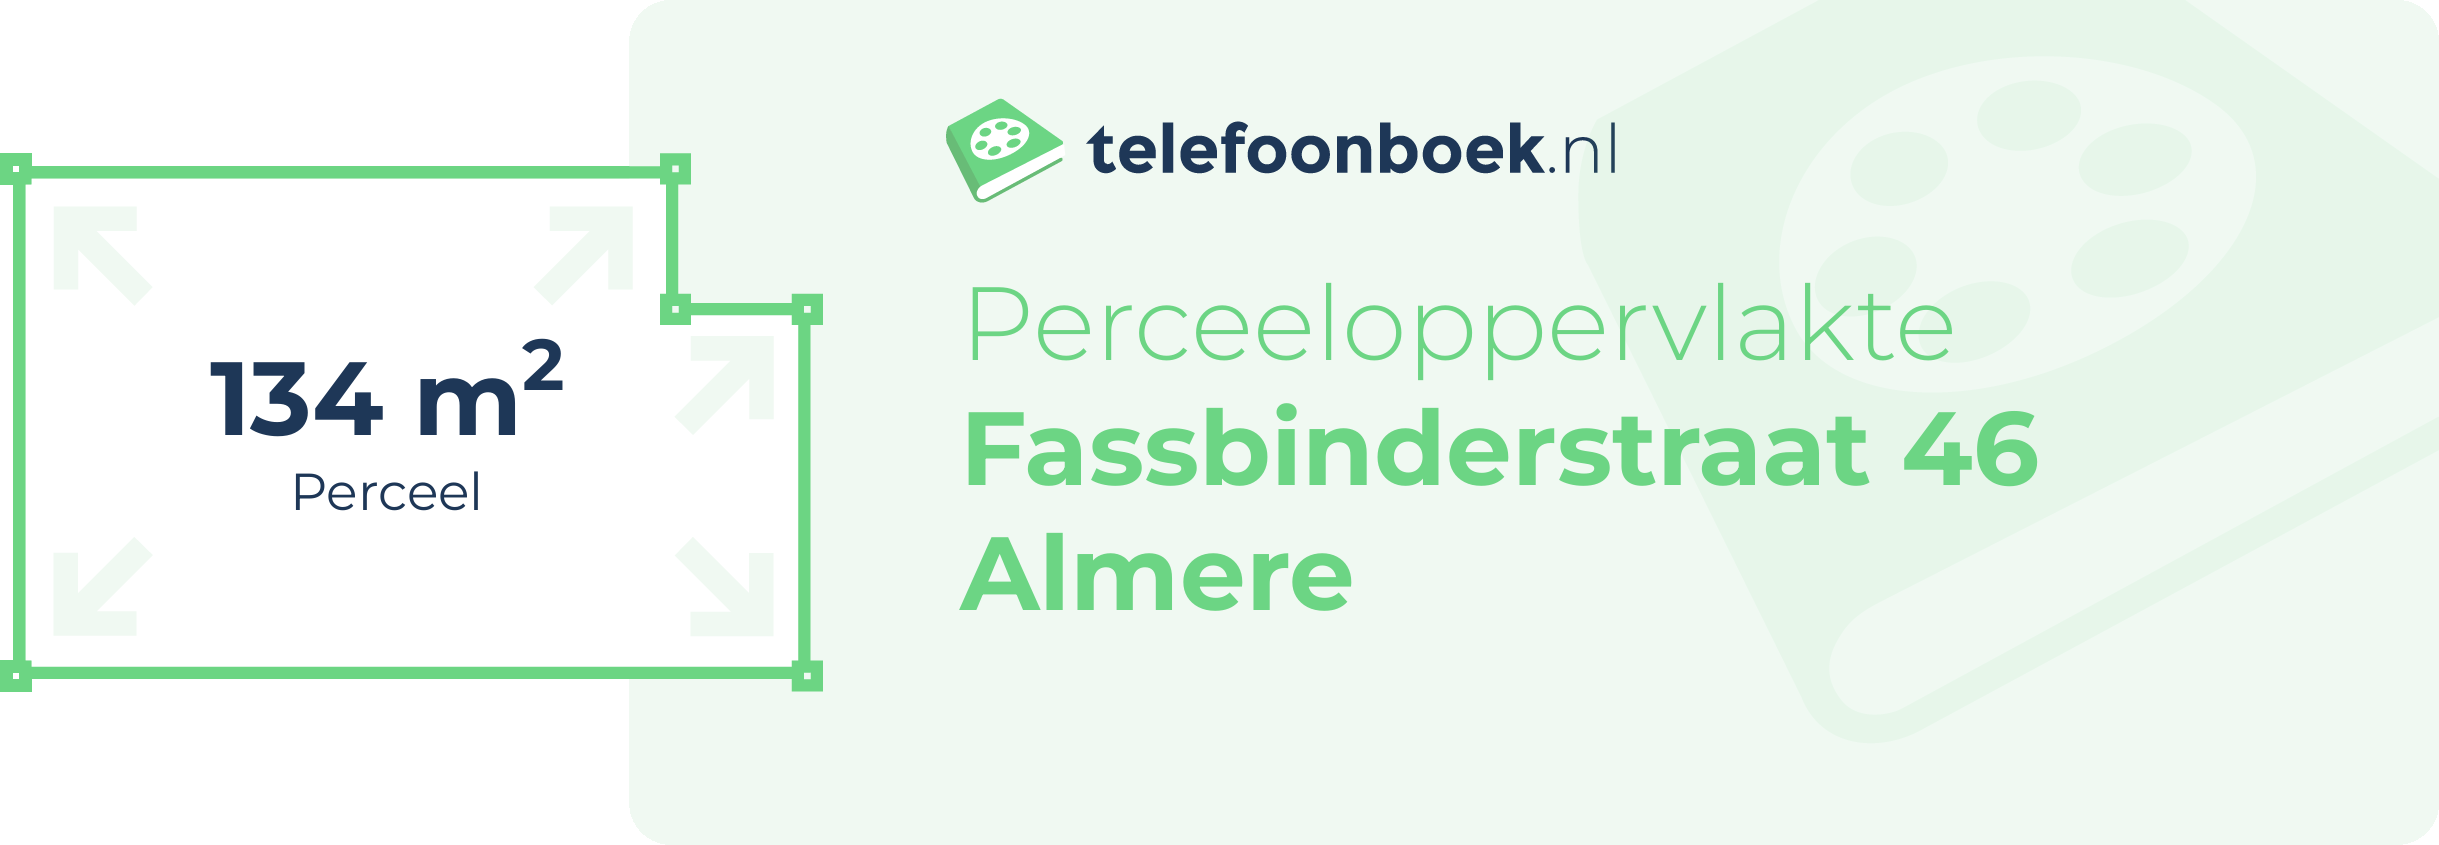 Perceeloppervlakte Fassbinderstraat 46 Almere